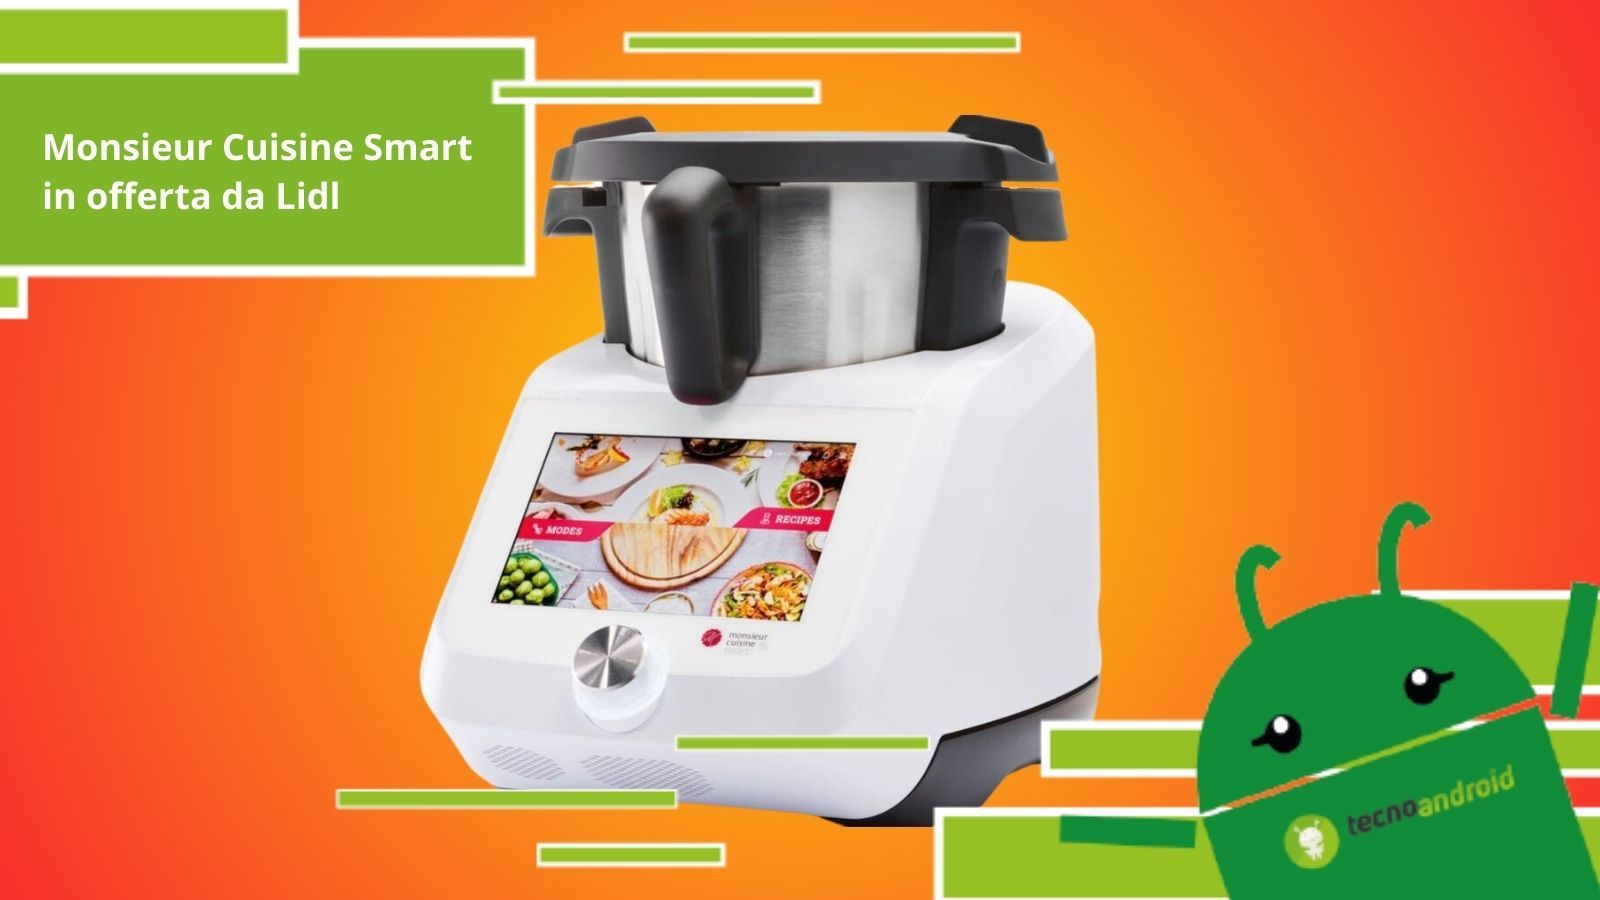 Monsieur Cuisine Smart, il robot da cucina che tutti sognano è in offerta